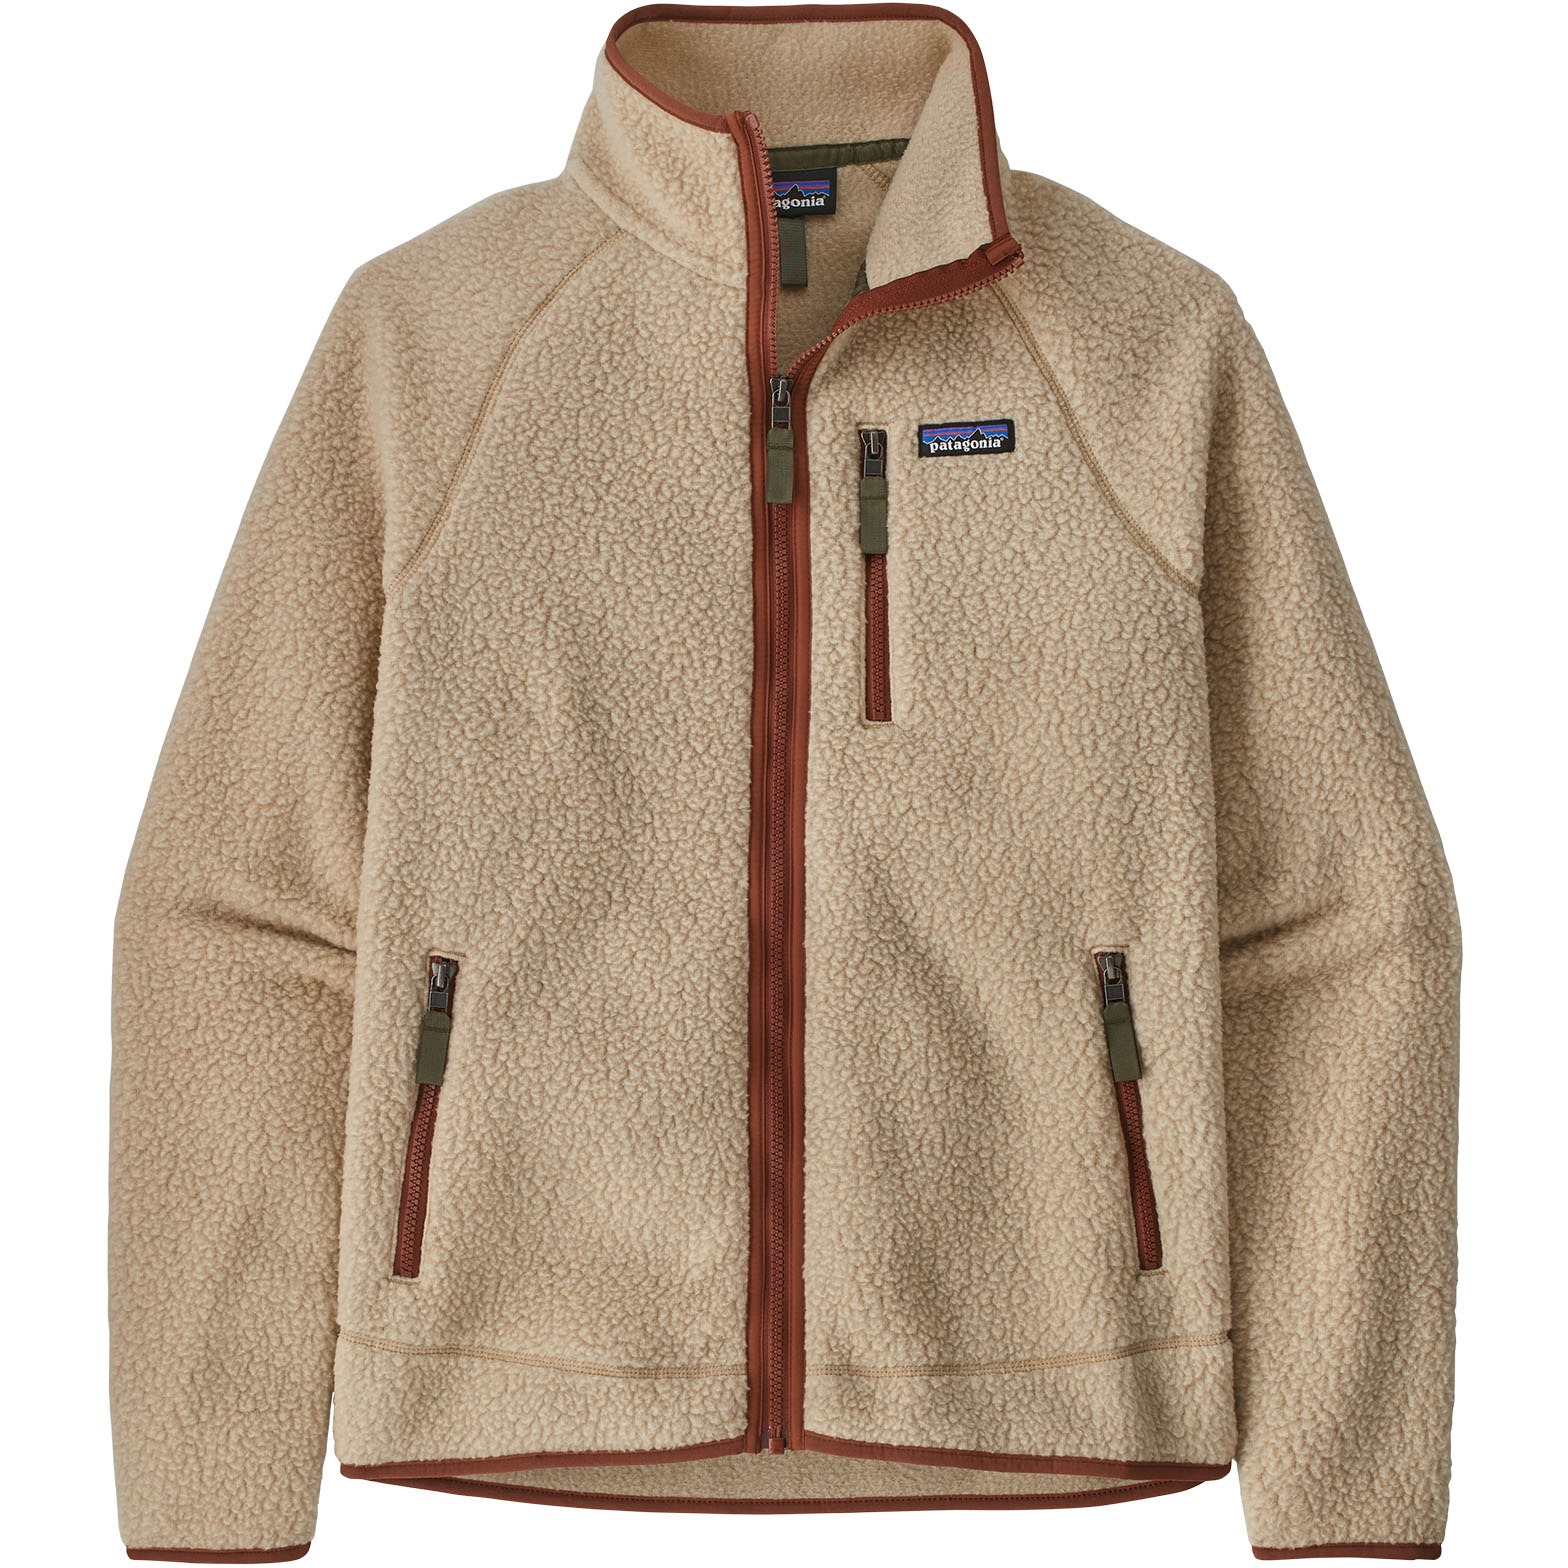 Patagonia Retro Pile Jacket Men - El Cap Khaki w/Sisu Brown | BIKE24